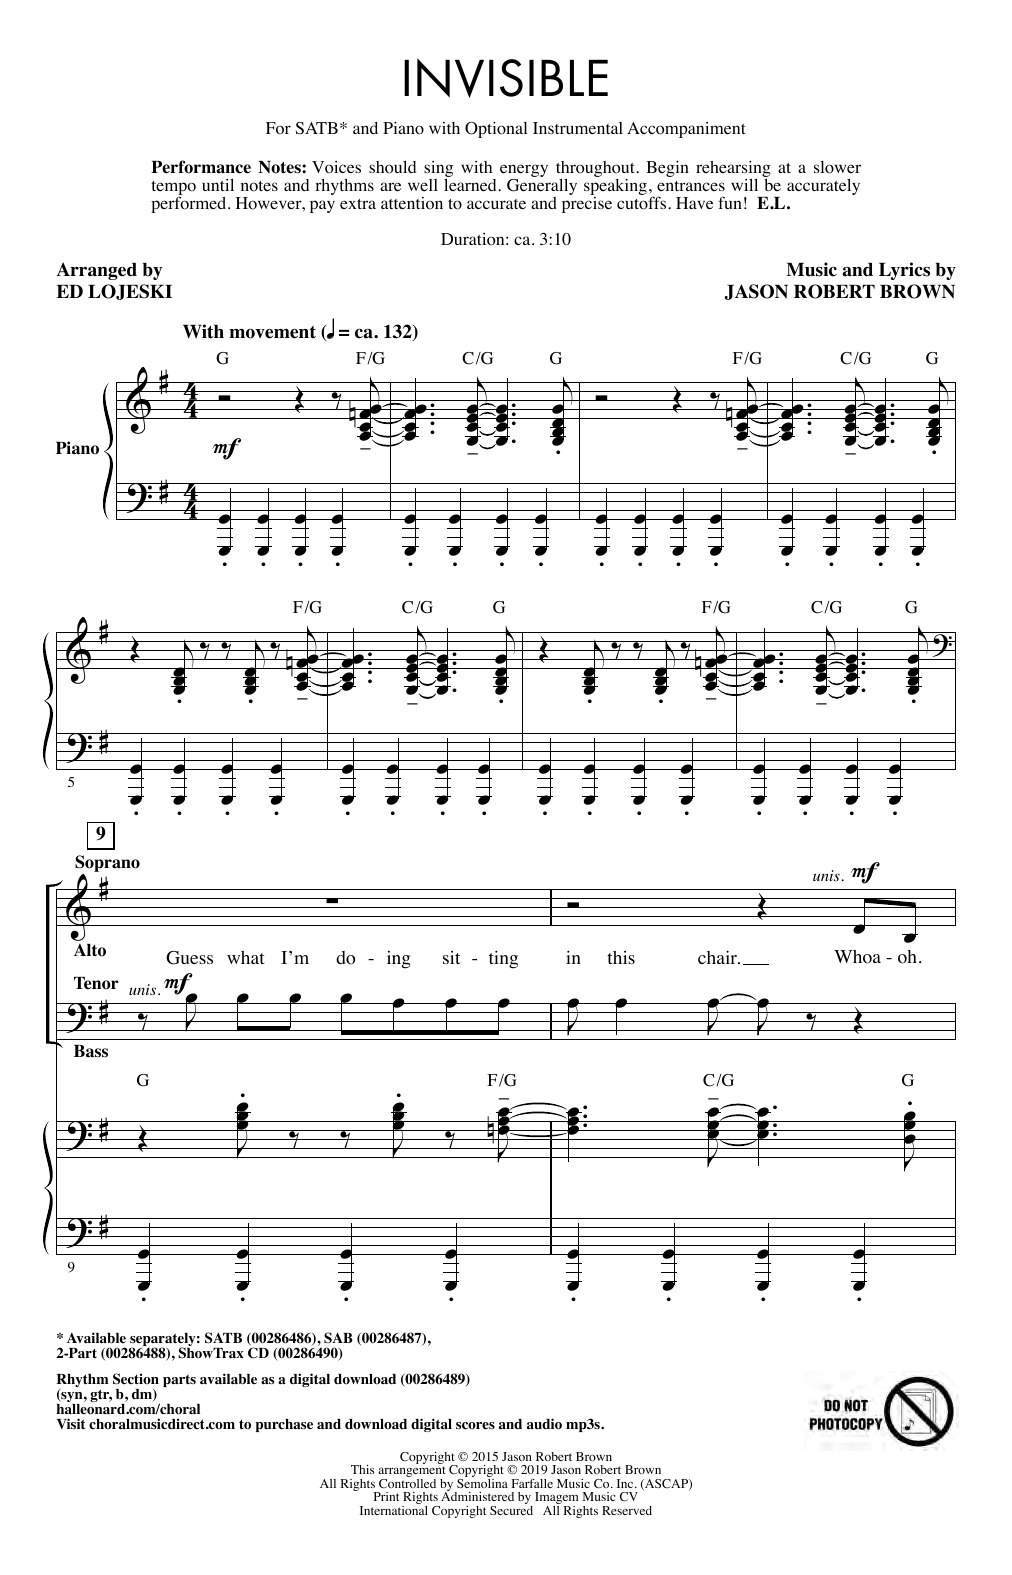 Jason Robert Brown Invisible (arr. Ed Lojeski) sheet music notes and chords arranged for SATB Choir